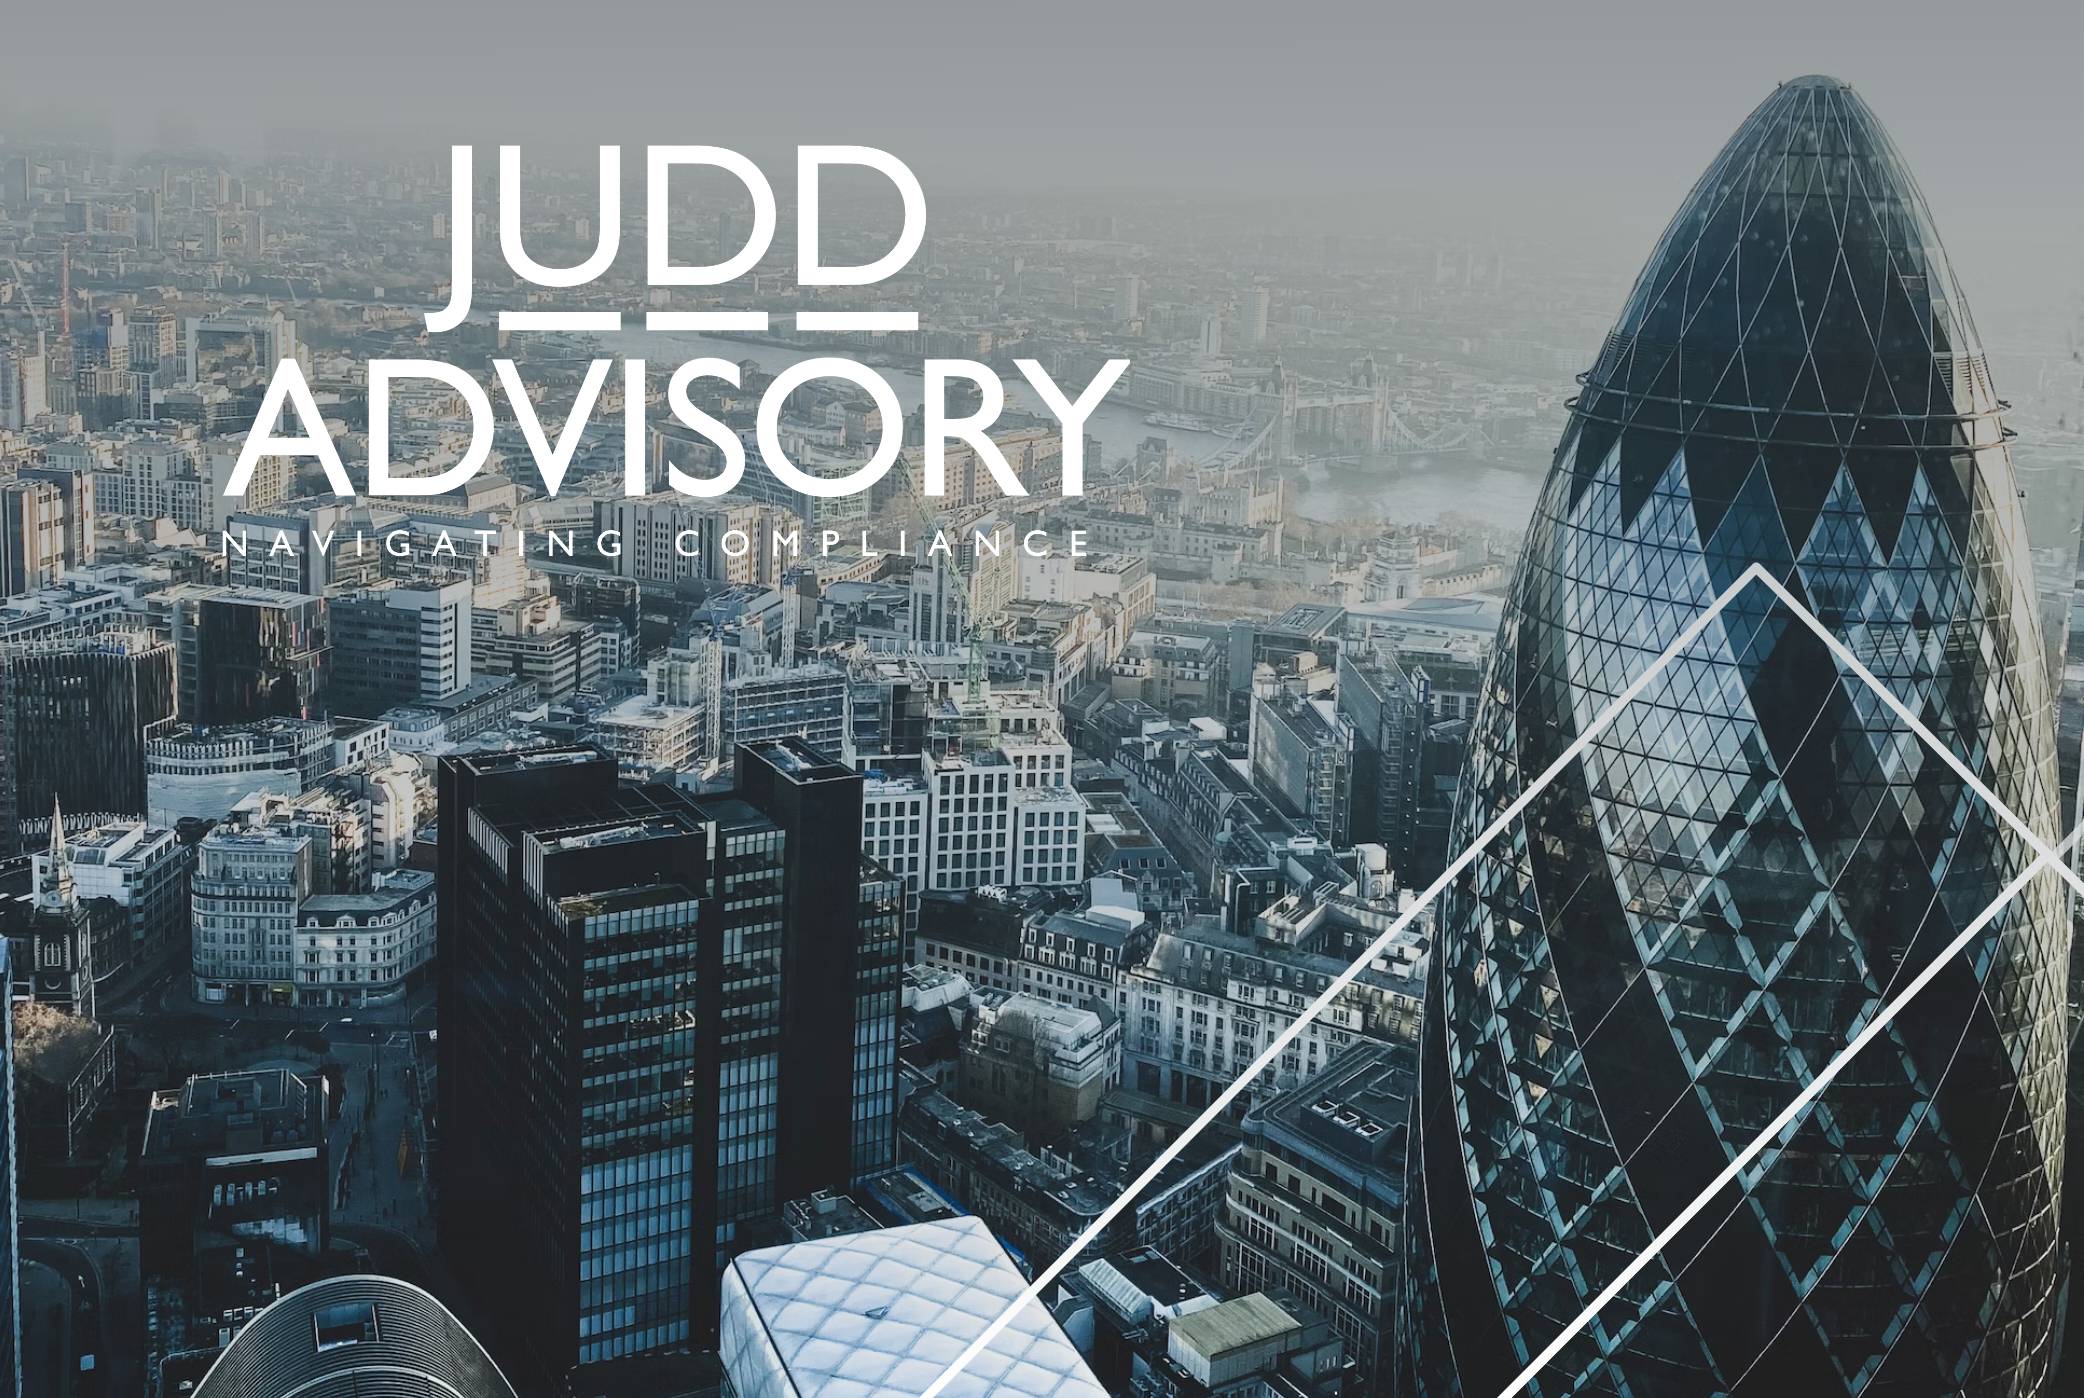 Image of London skyline with Judd Advisory logo